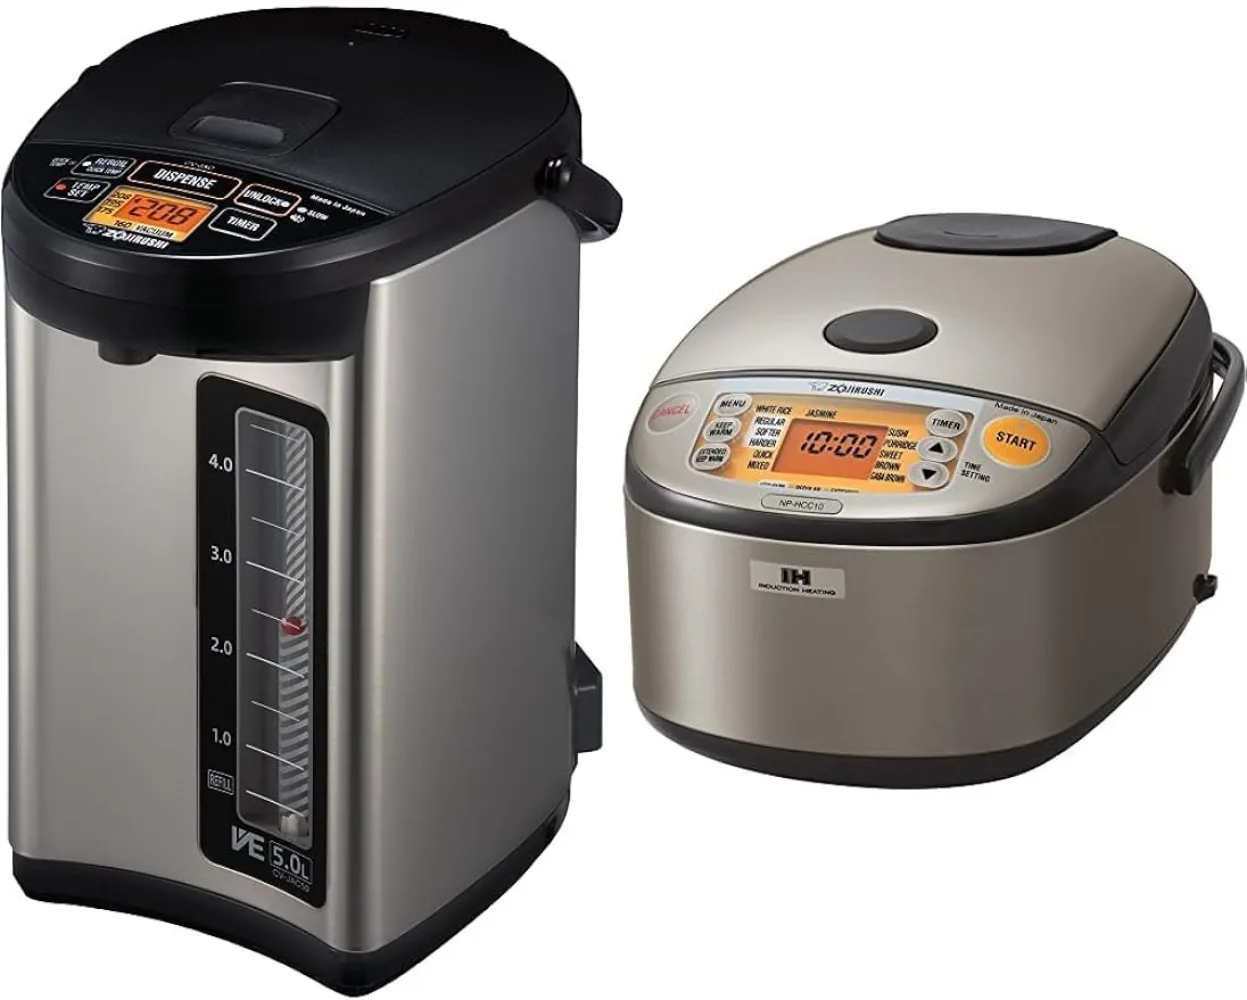 

CV-JAC50XB, VE Hybrid Water Boiler & Warmer, 5.0 Liter, Stainless Black Induction Heating System Rice Cooker